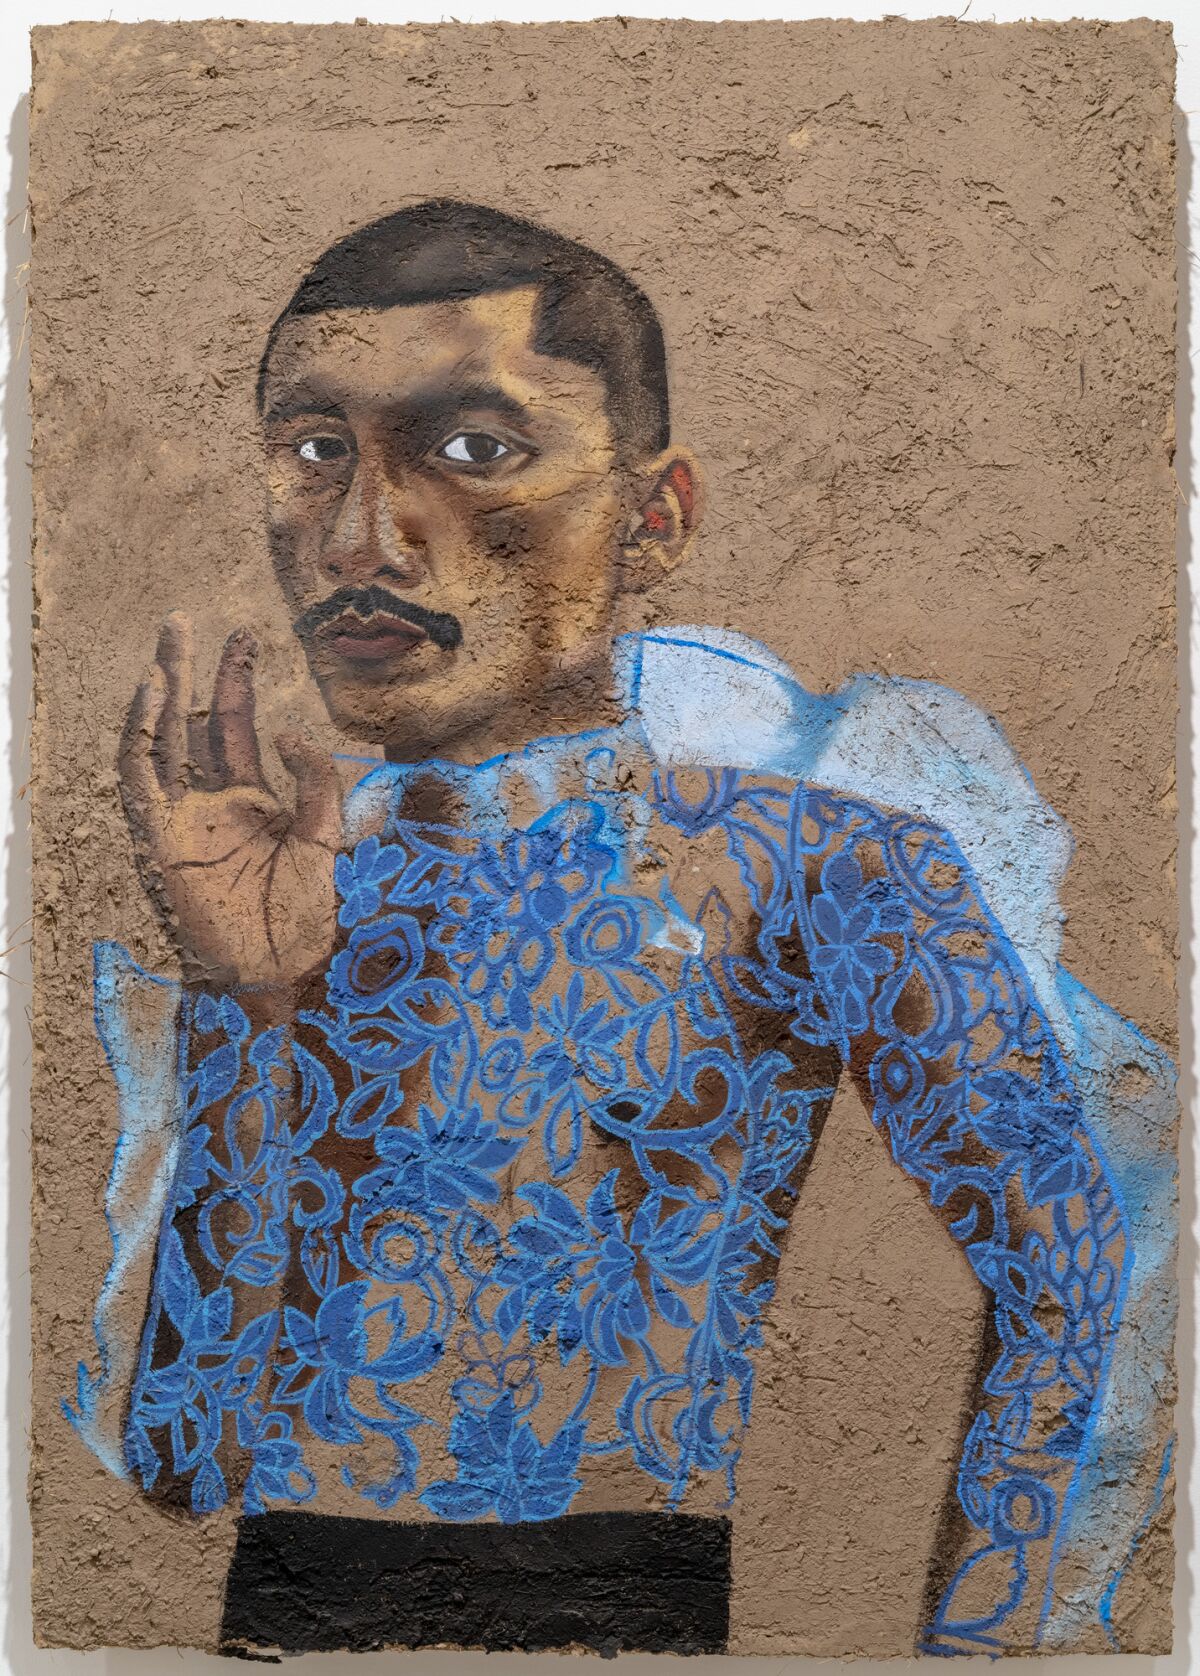 A portrait of performance artist Sebastian Hernandez painted on adobe by Rafa Esparza